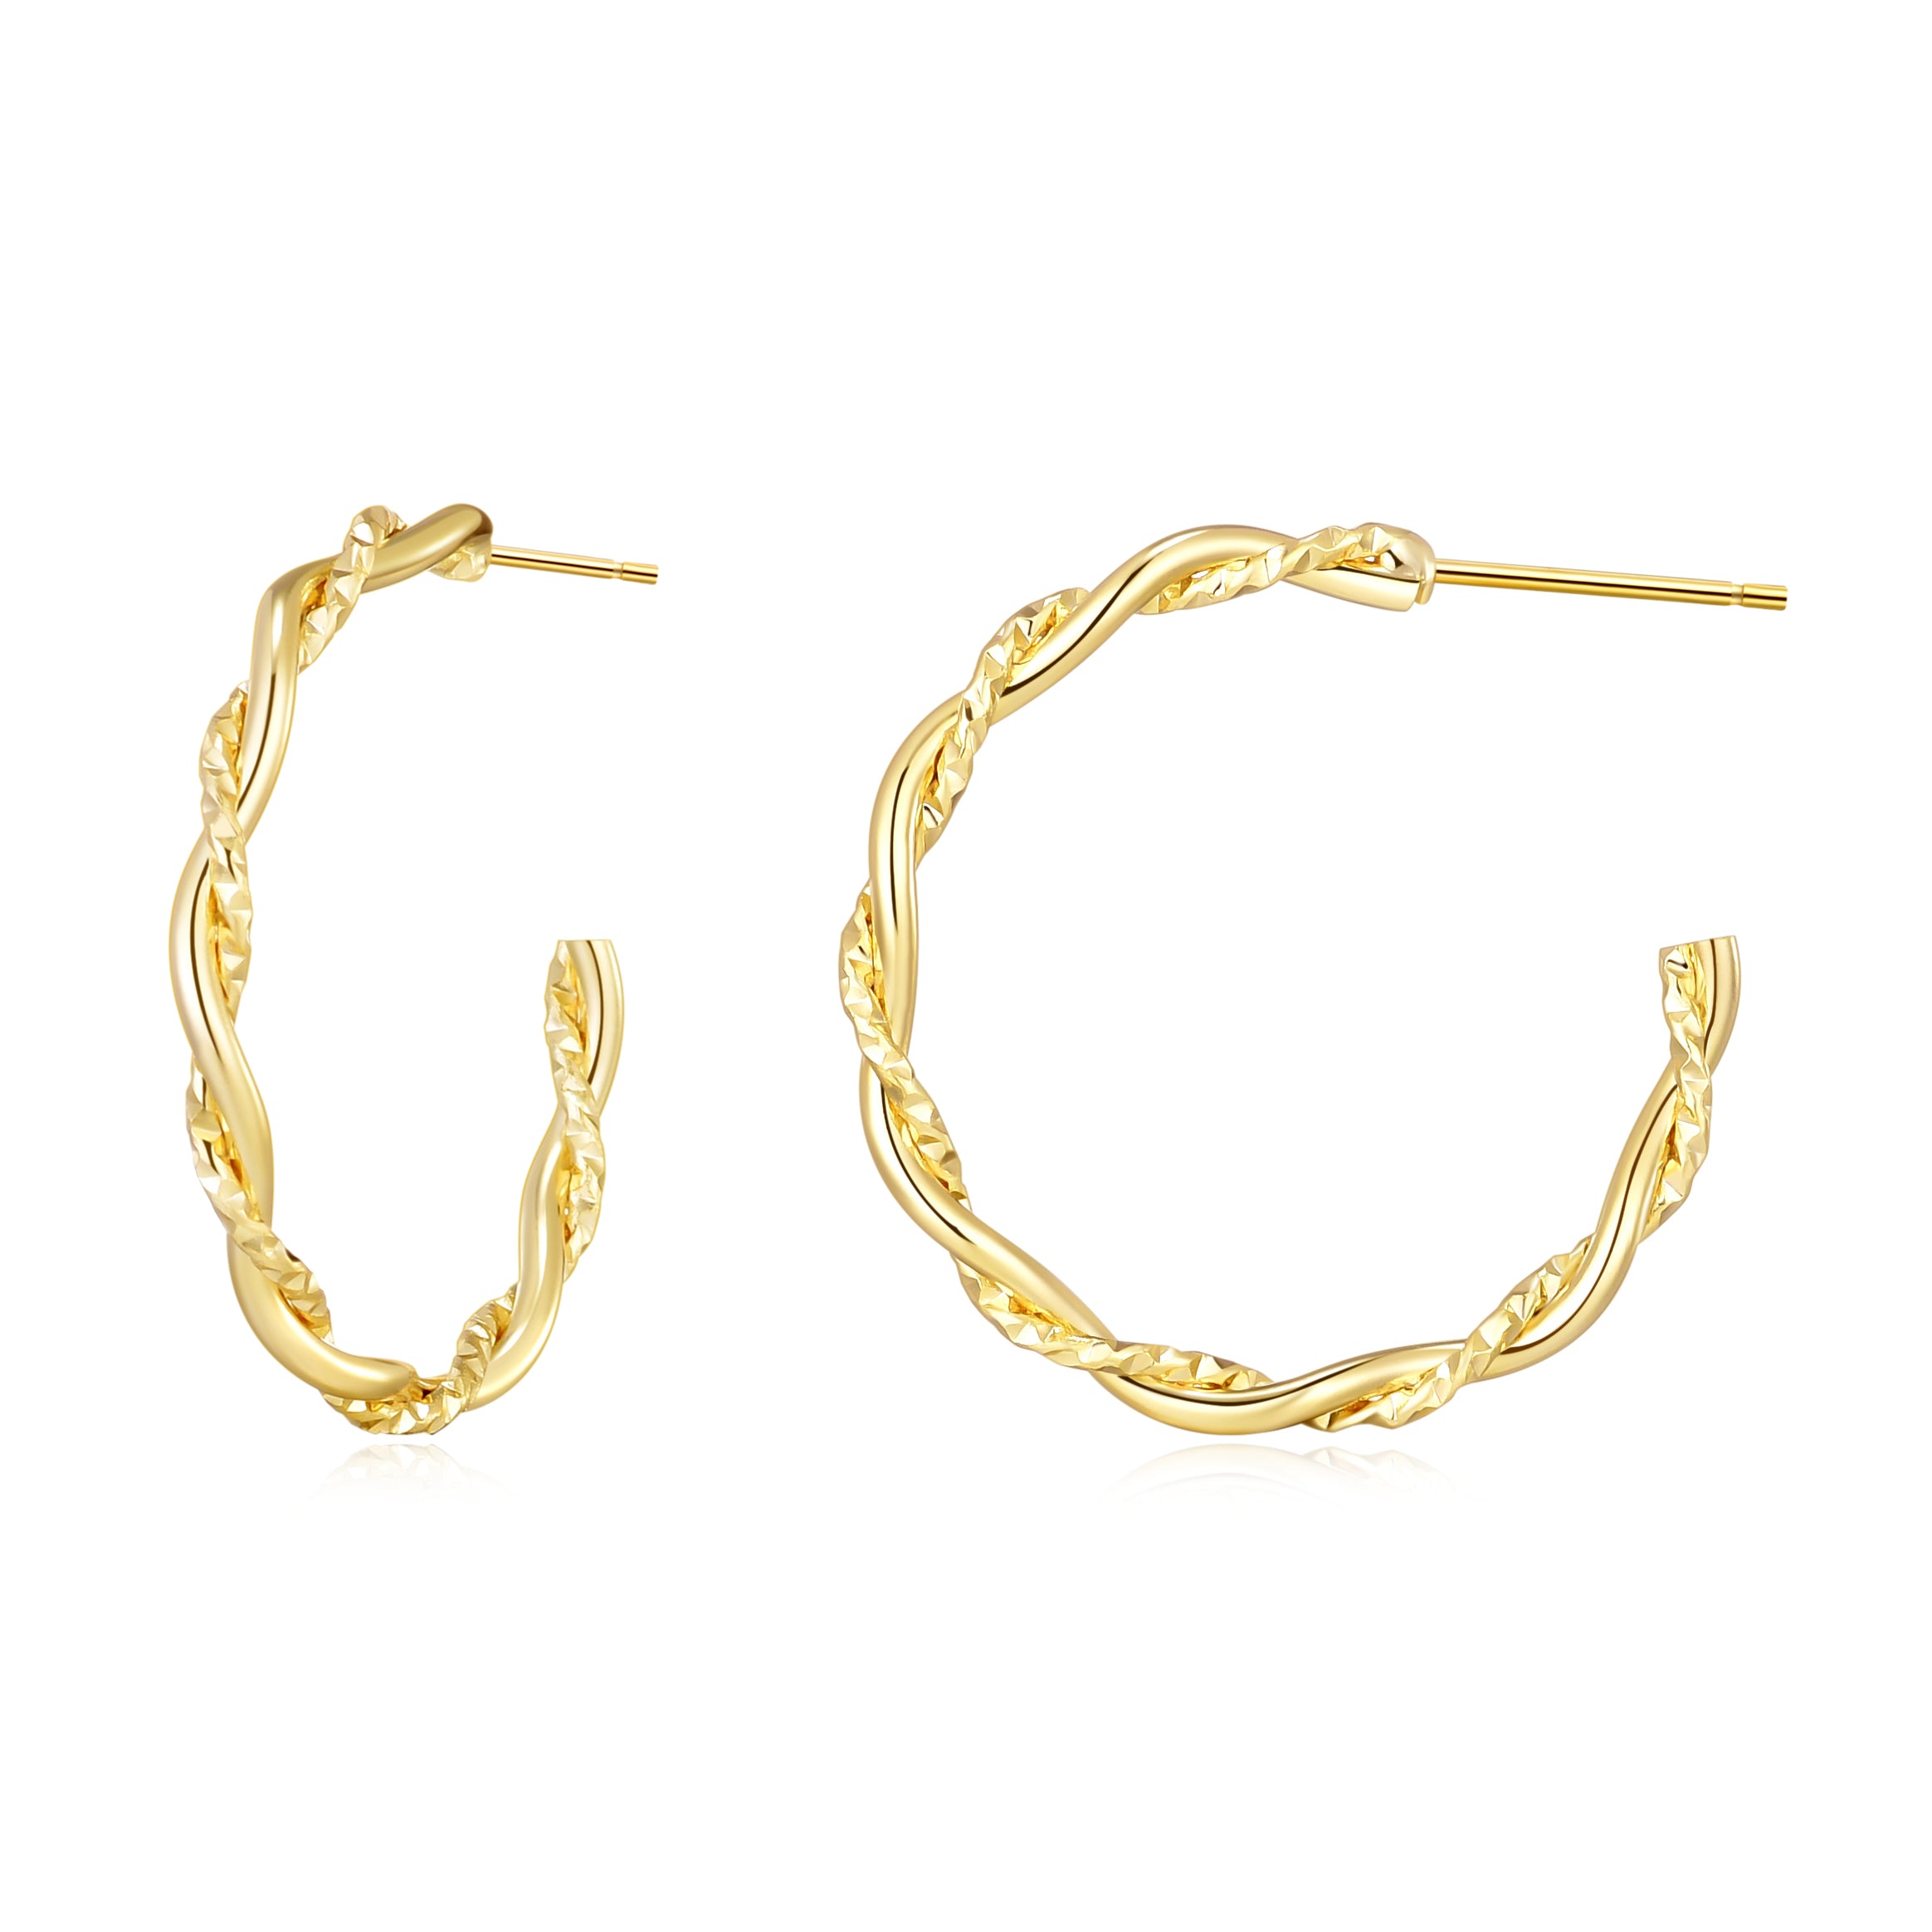 Gold Plated 30mm Twisted Diamond Cut Hoop Earrings by Philip Jones Jewellery